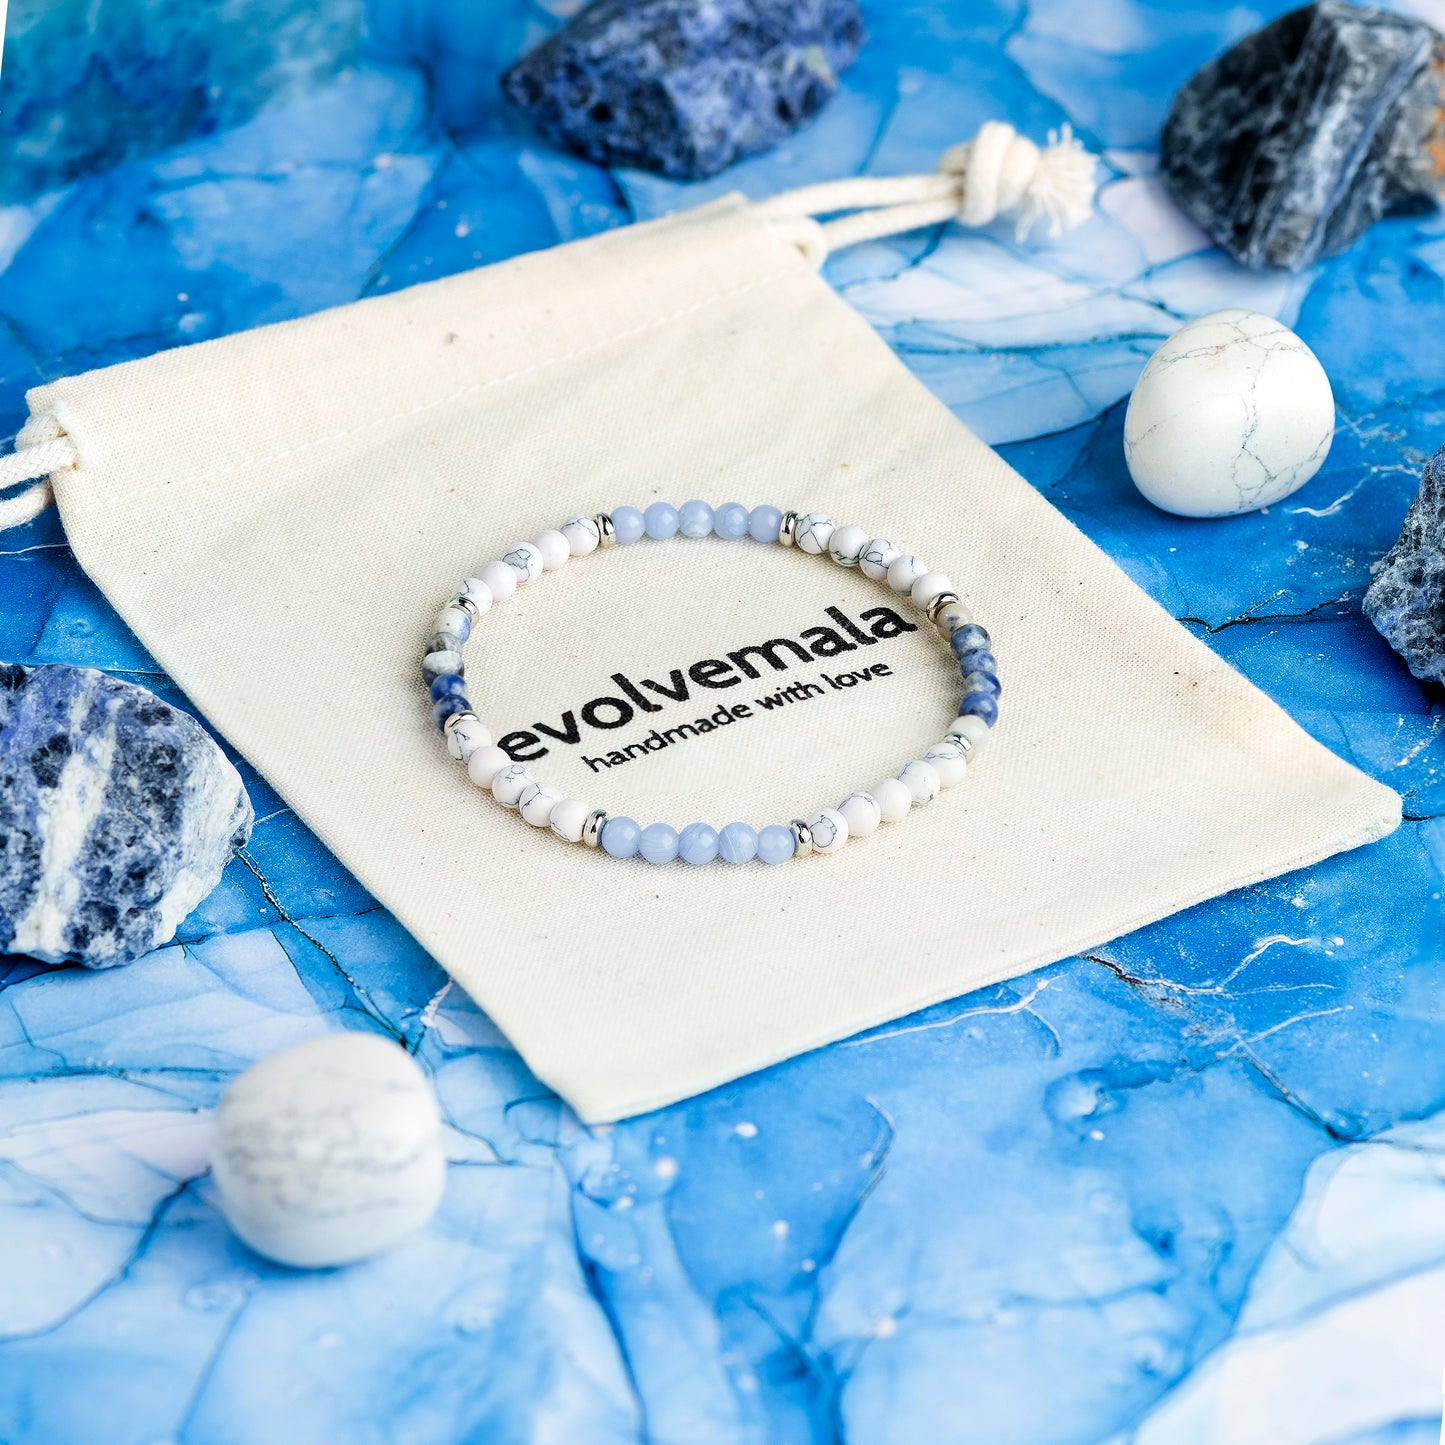 Blue Lace Agate, Howlite & Sodalite Mini Gemstone Bracelet II